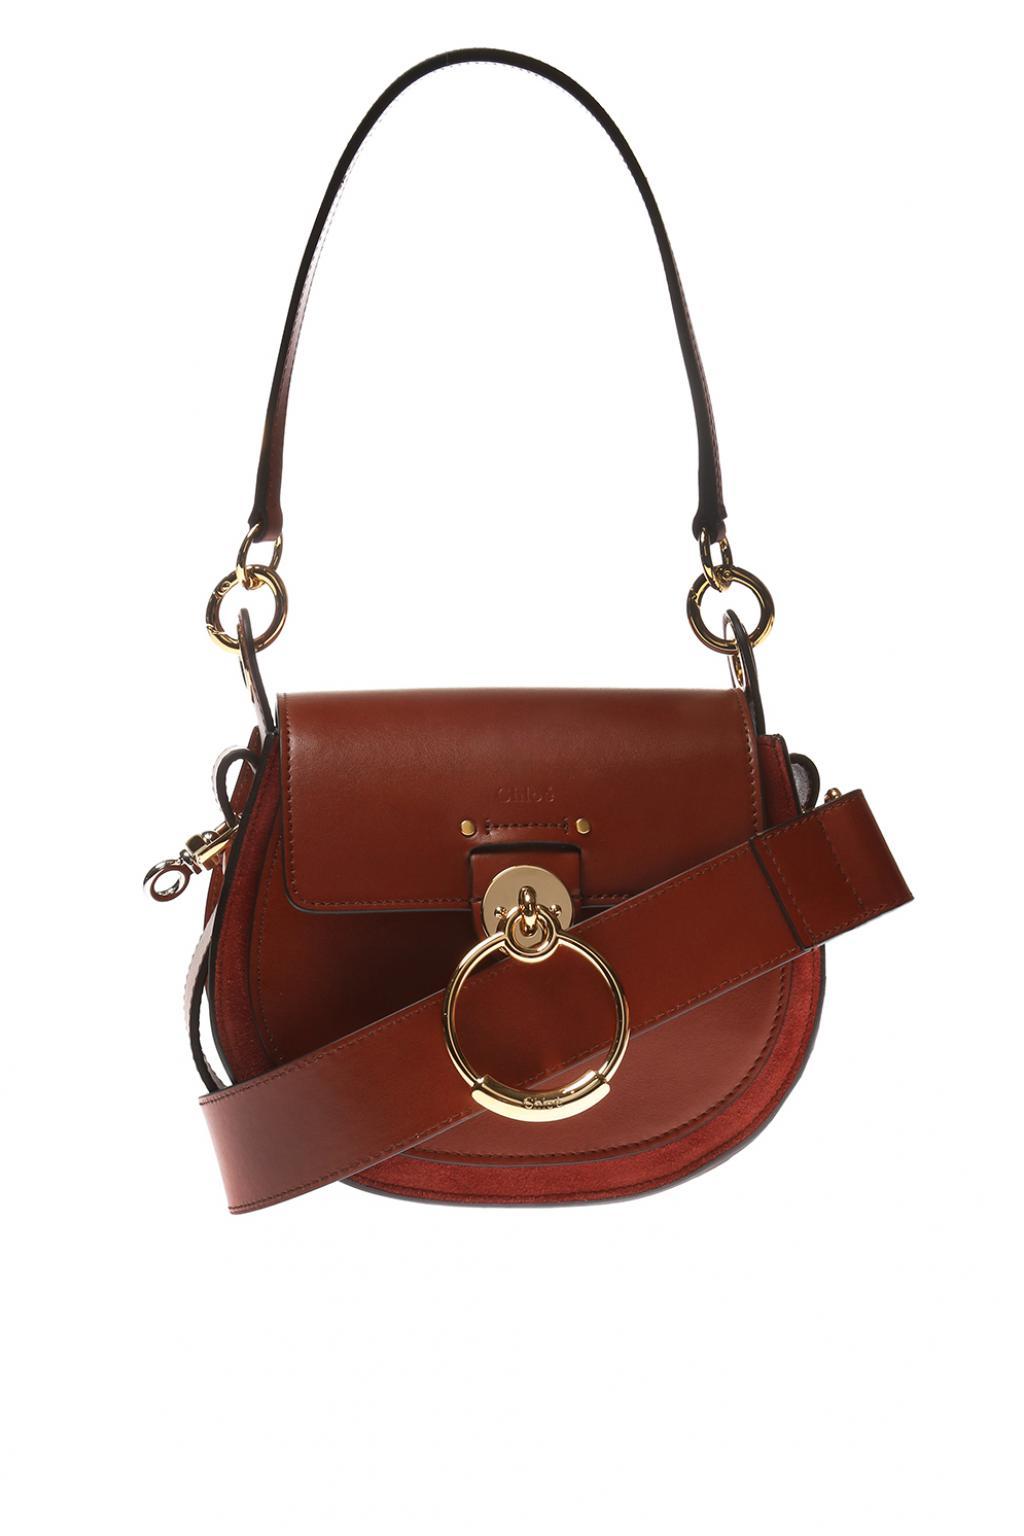 Chloé 'tess' Shoulder Bag in Brown - Lyst